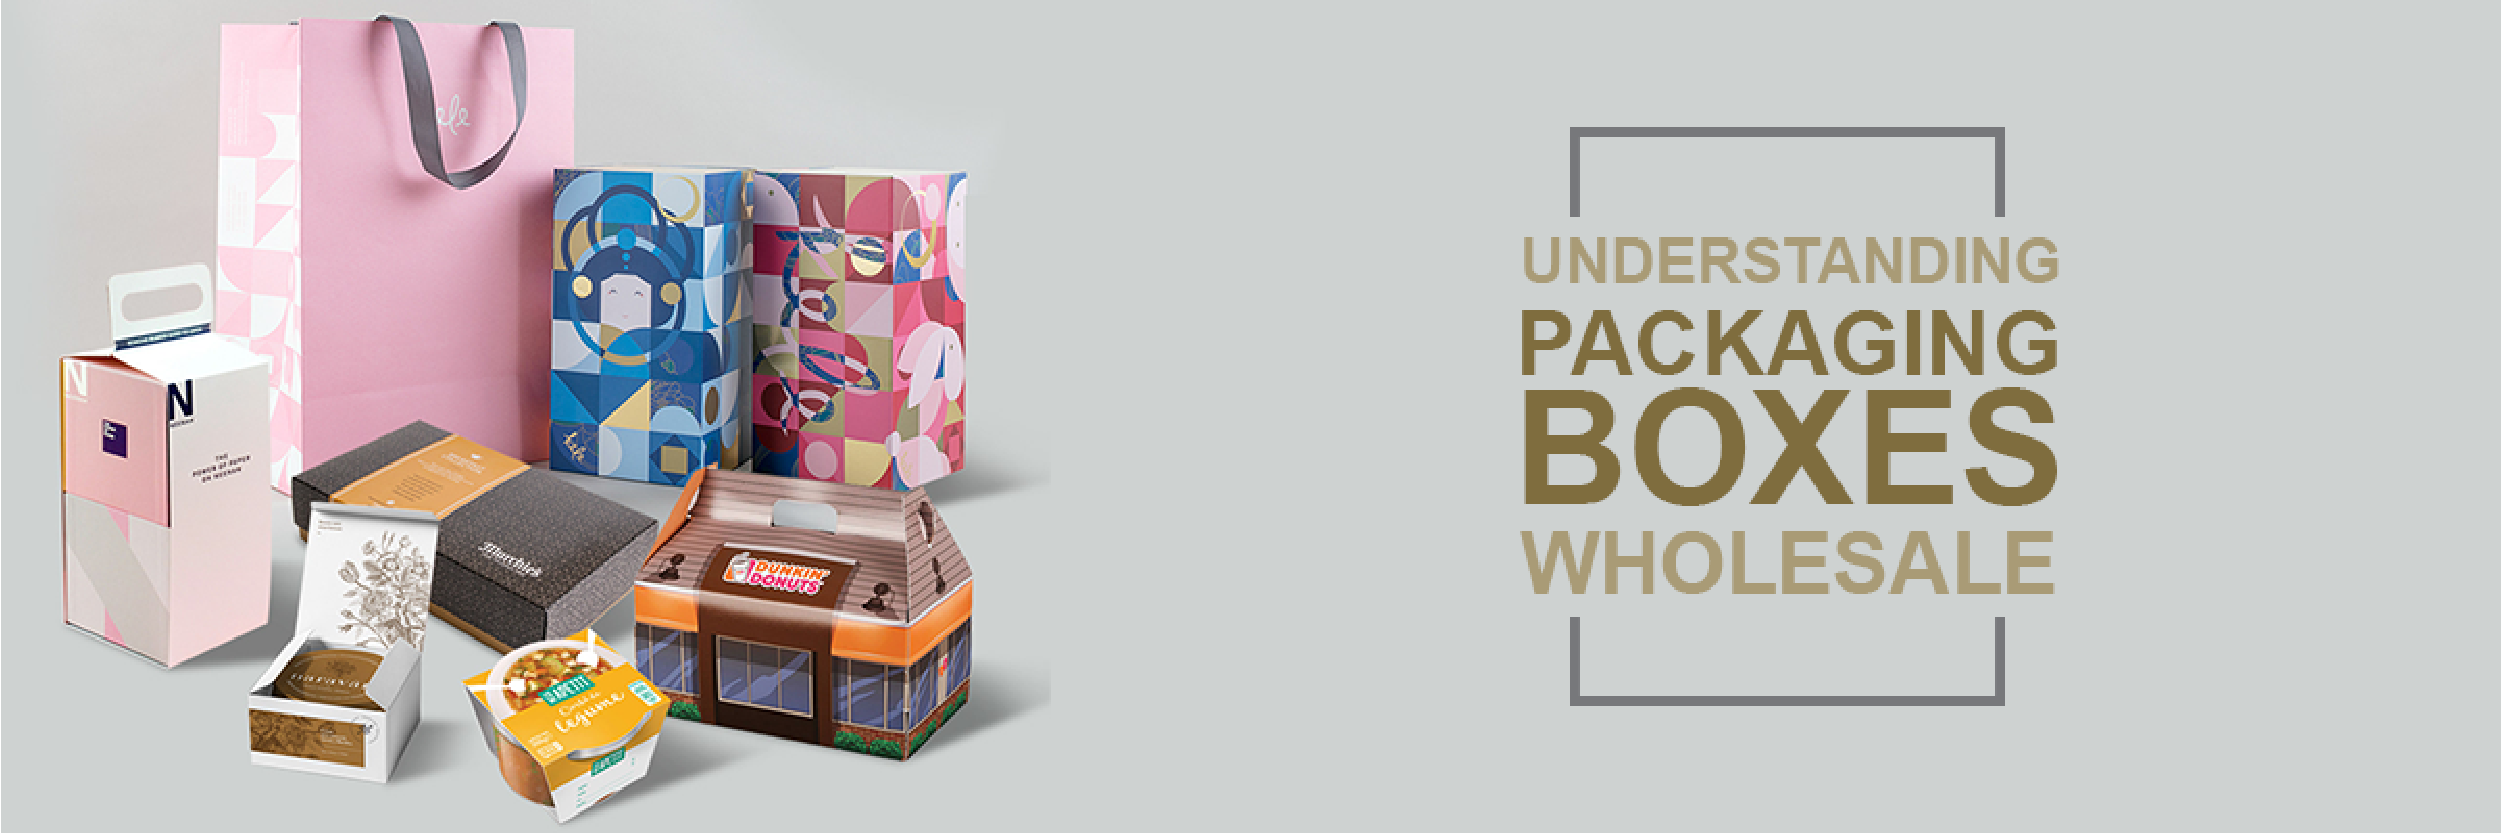 Understanding Packaging Boxes Wholesale